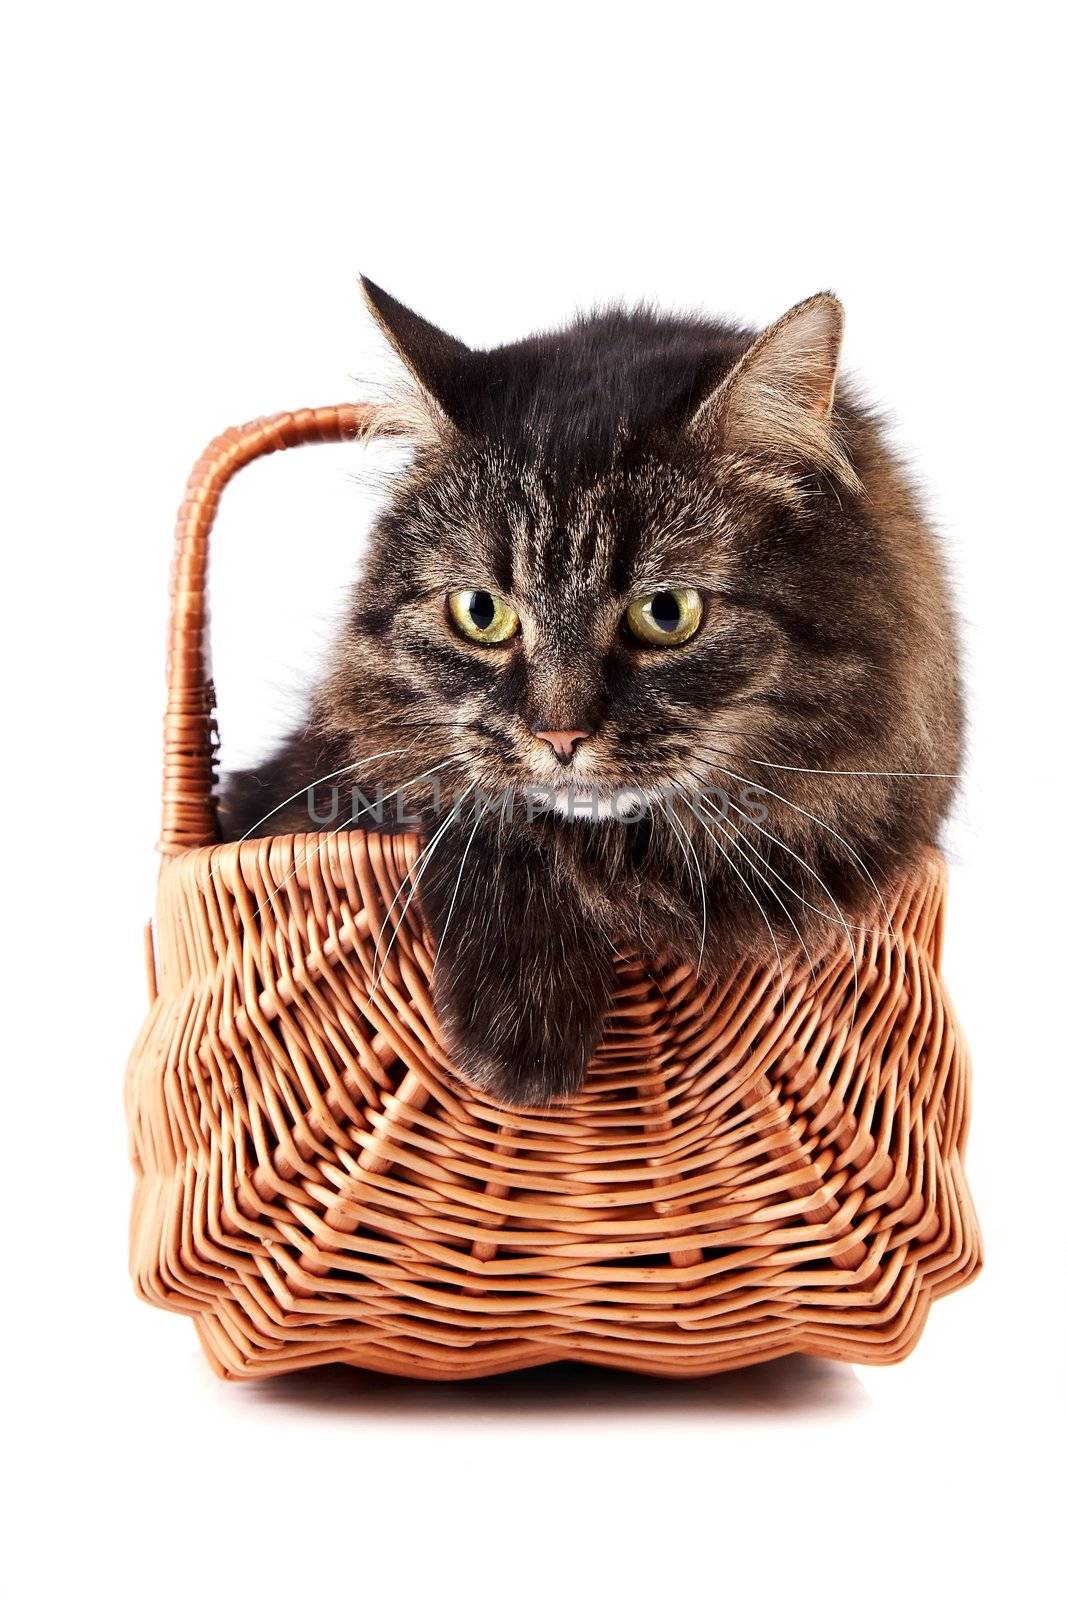 Angry fluffy cat in a wattled basket by Azaliya